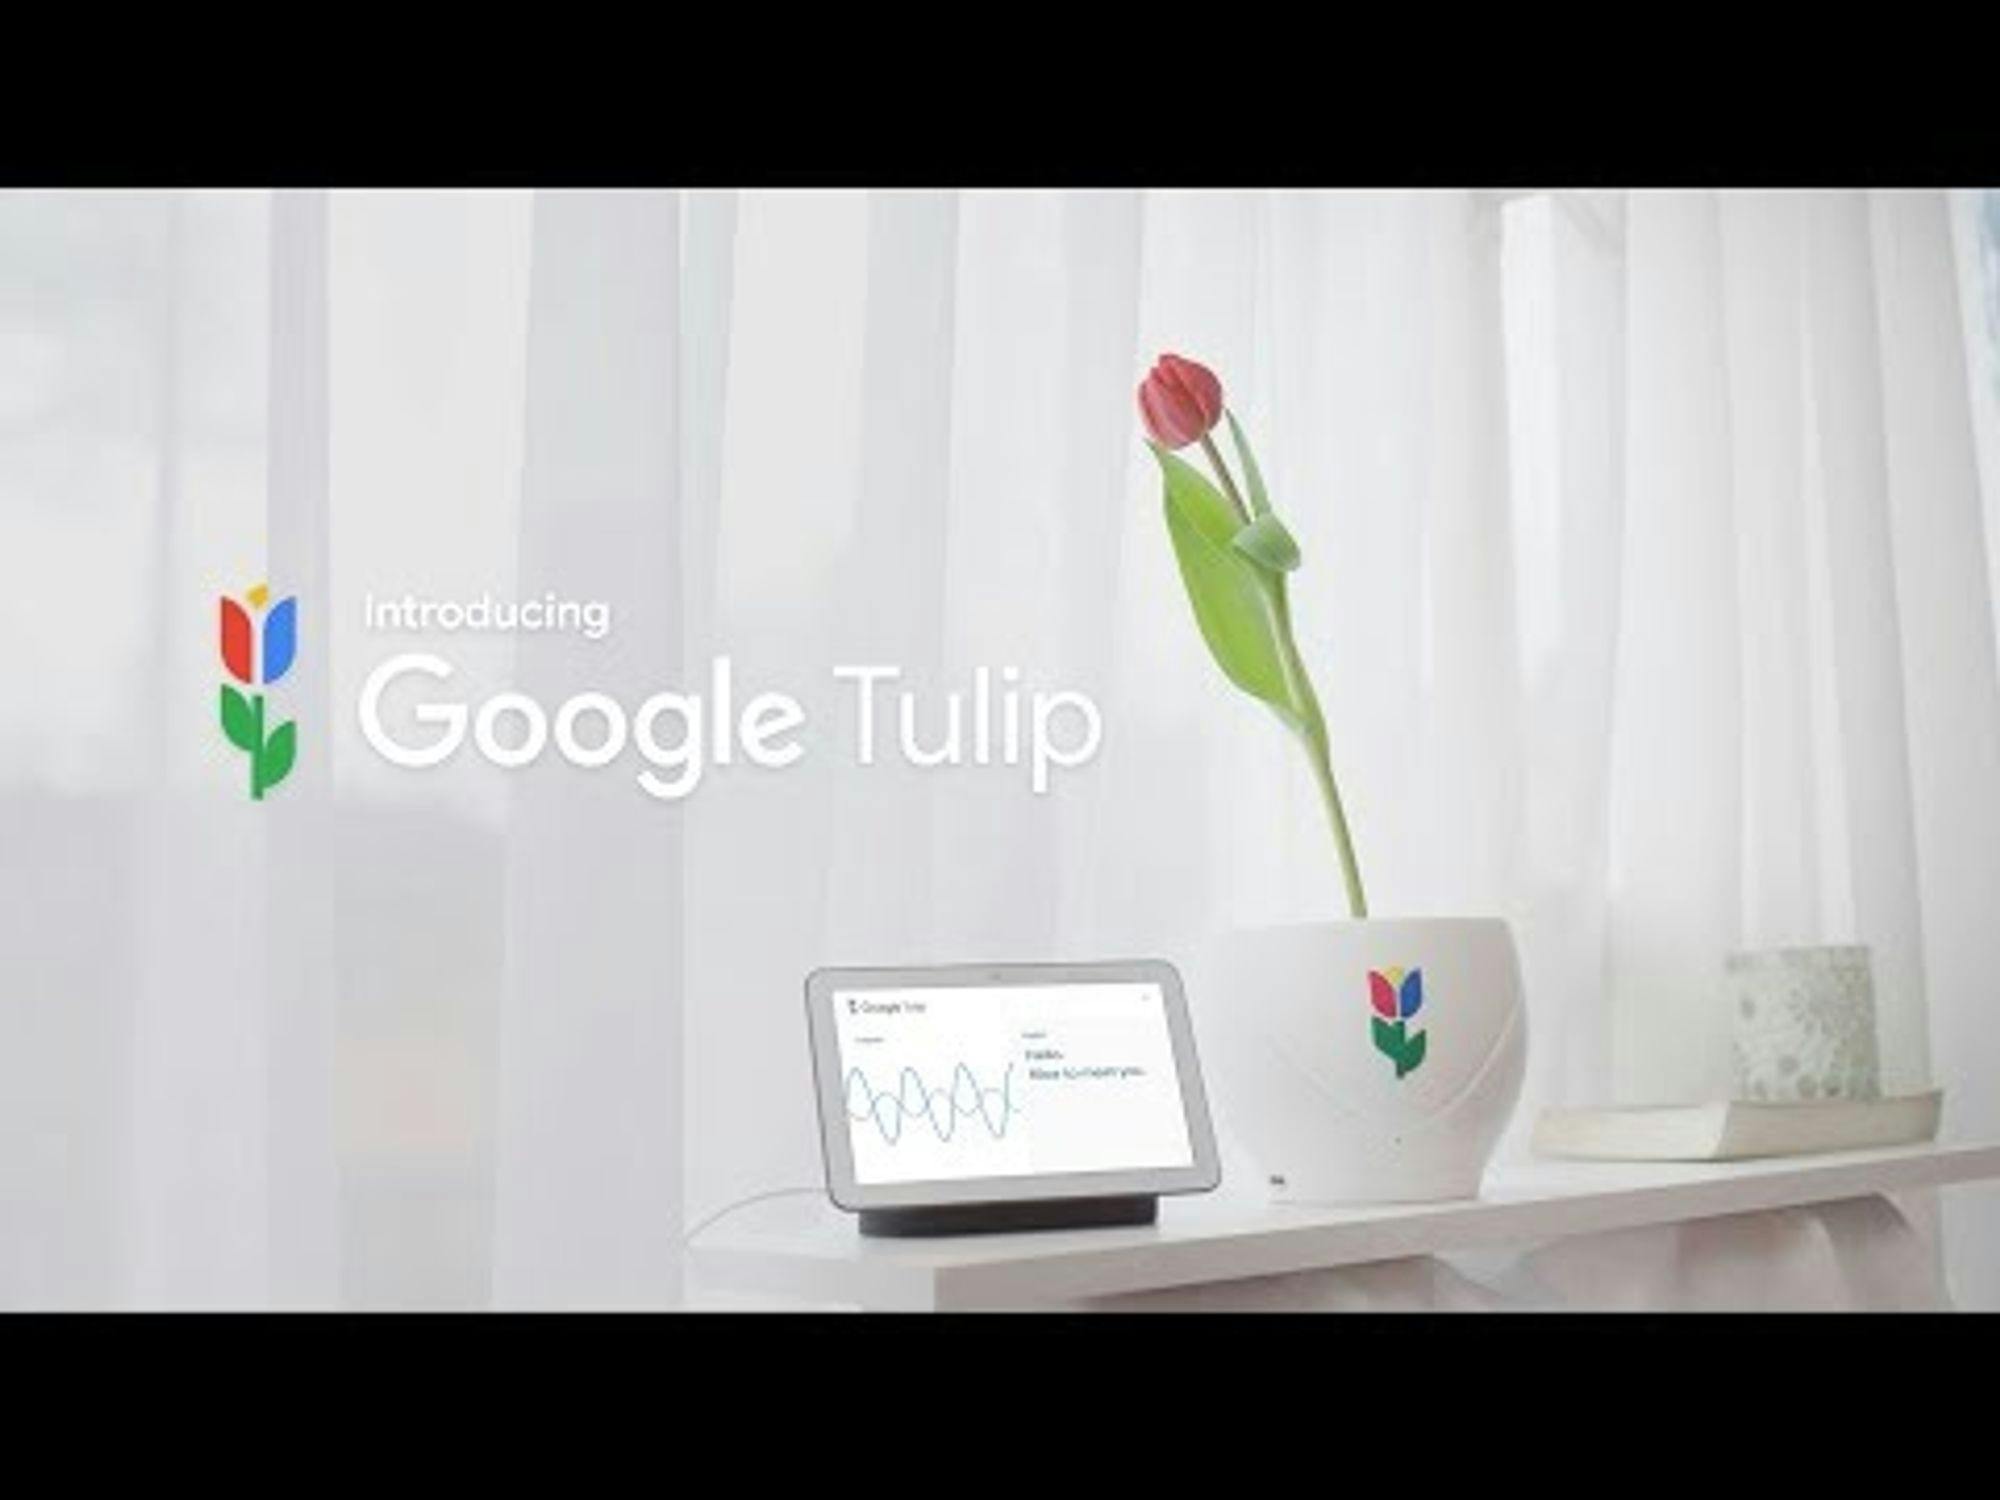 Introducing Google Tulip